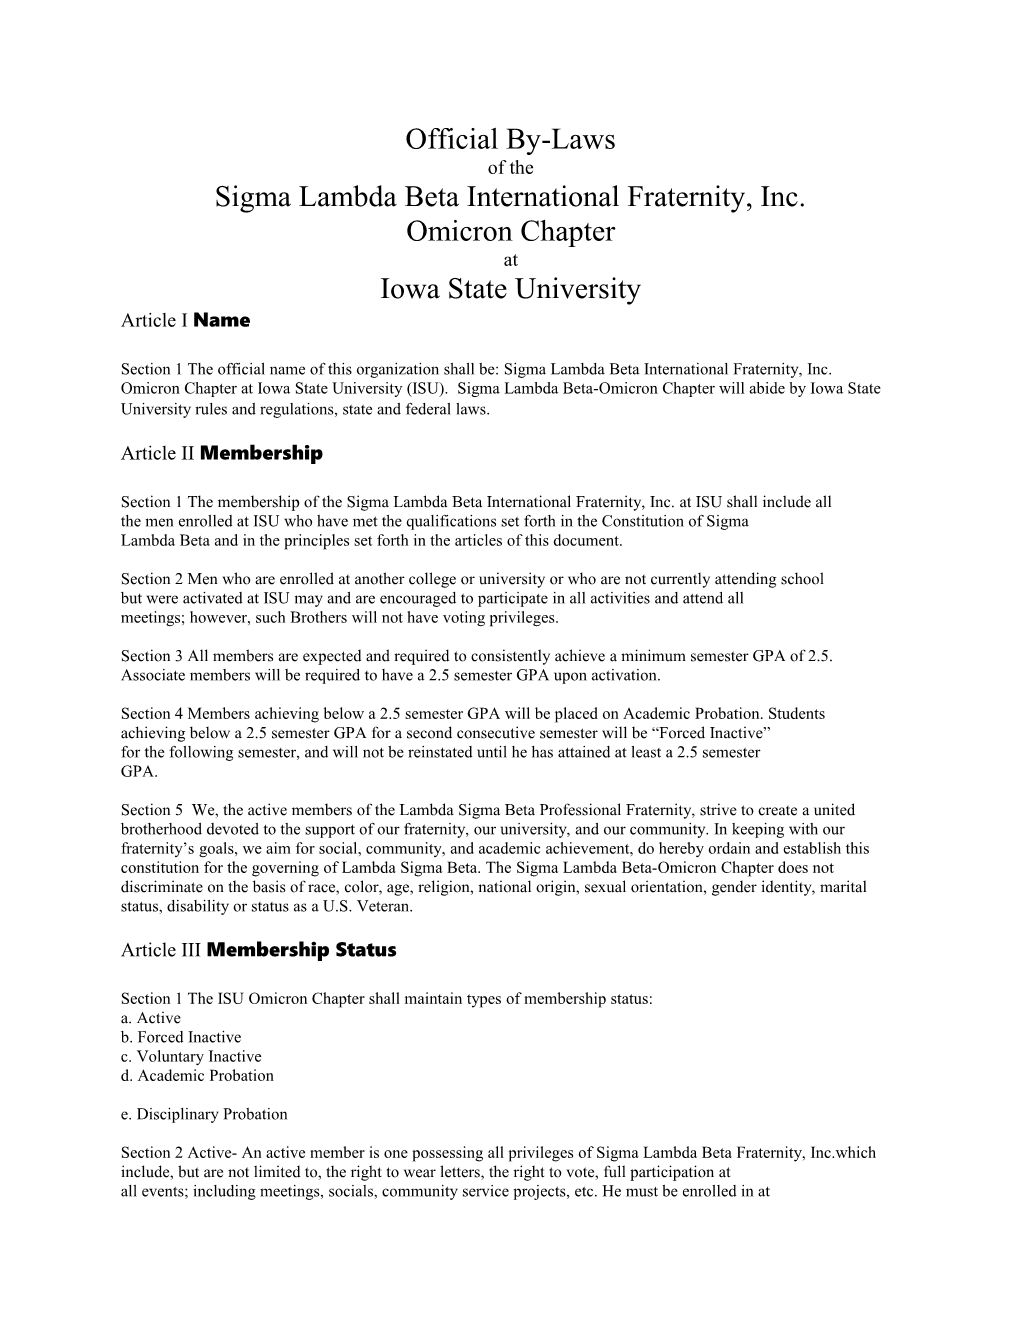 Sigma Lambda Beta International Fraternity, Inc